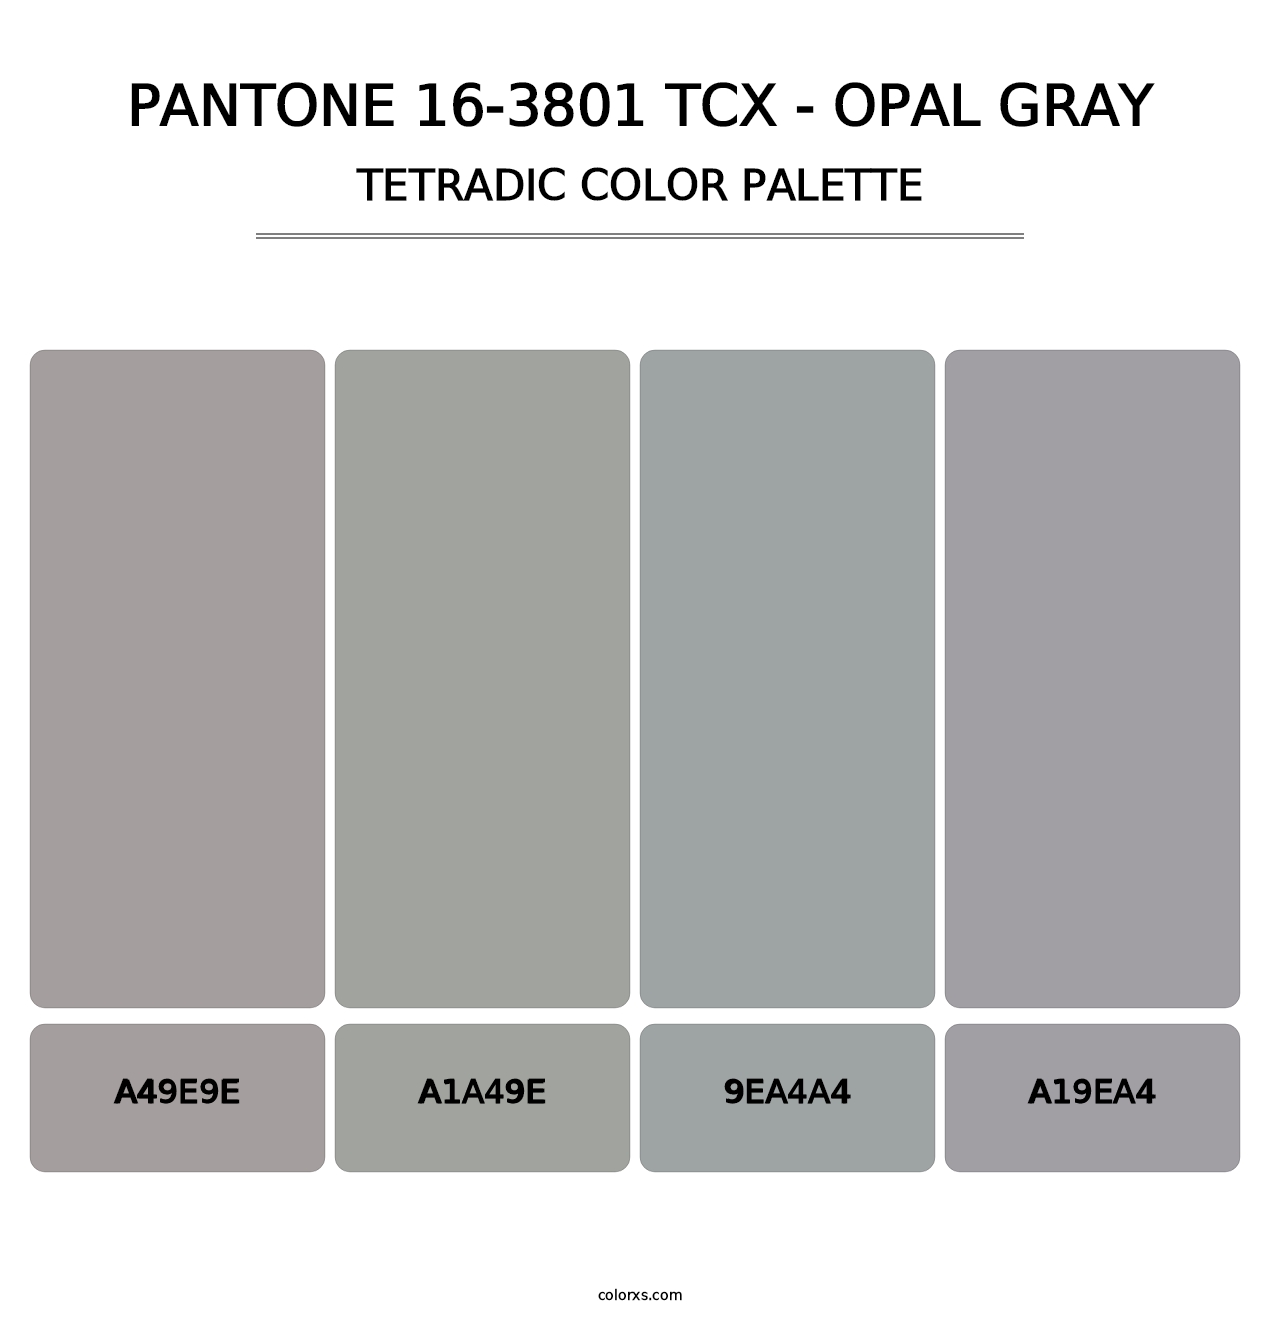 PANTONE 16-3801 TCX - Opal Gray - Tetradic Color Palette